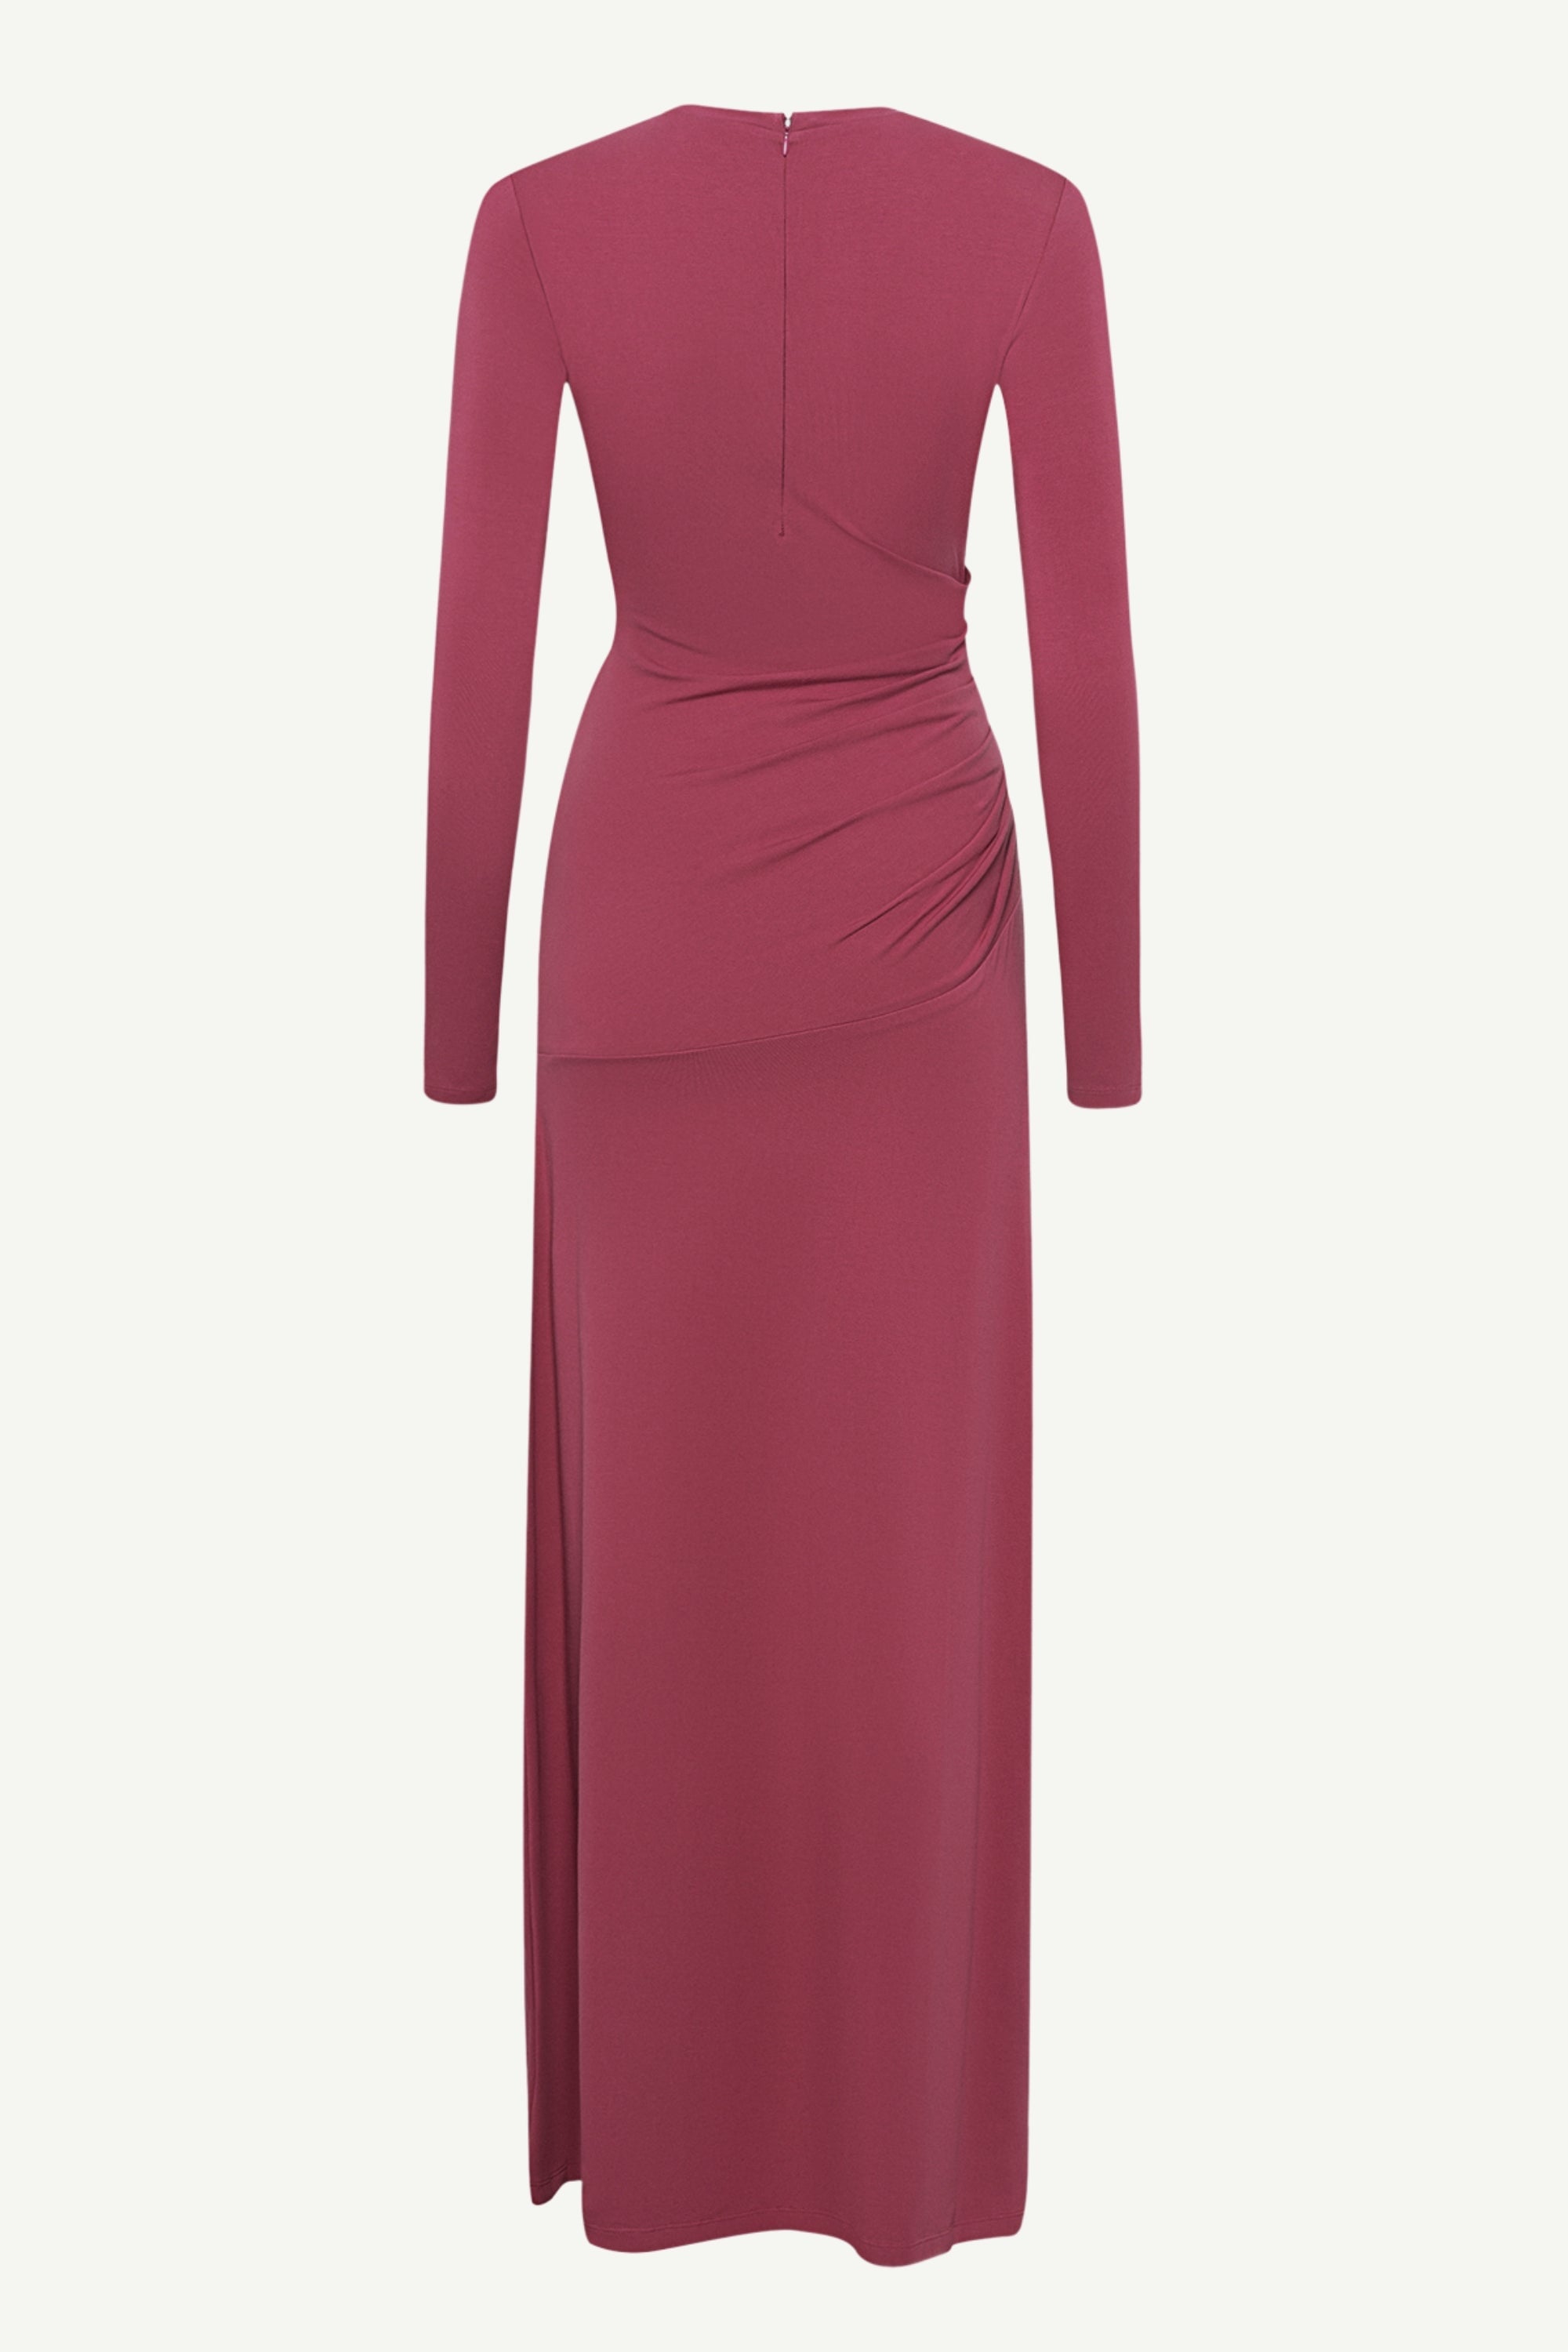 Natalie Rouched Jersey Maxi Dress - Dry Rose Clothing saigonodysseyhotel 